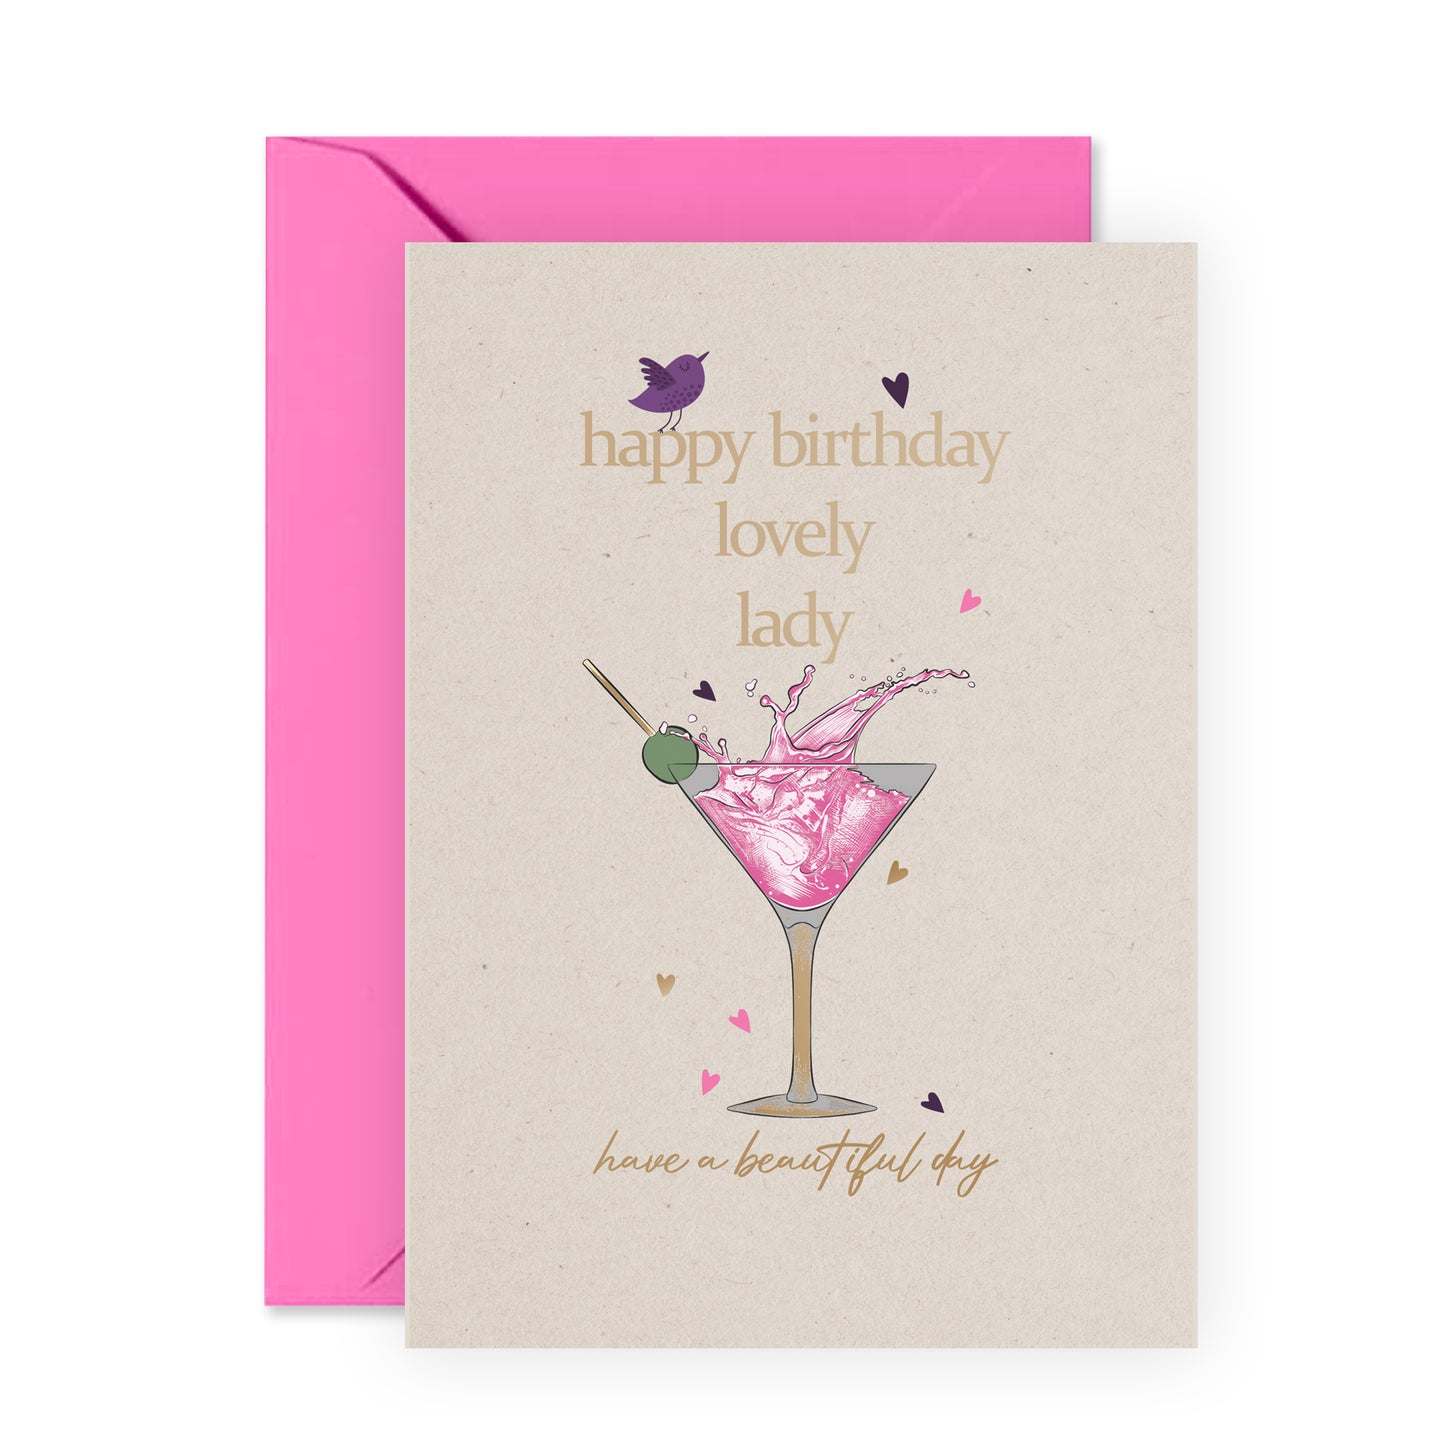 Cute Birthday Card - Happy Birthday Lovely Lady - For Women